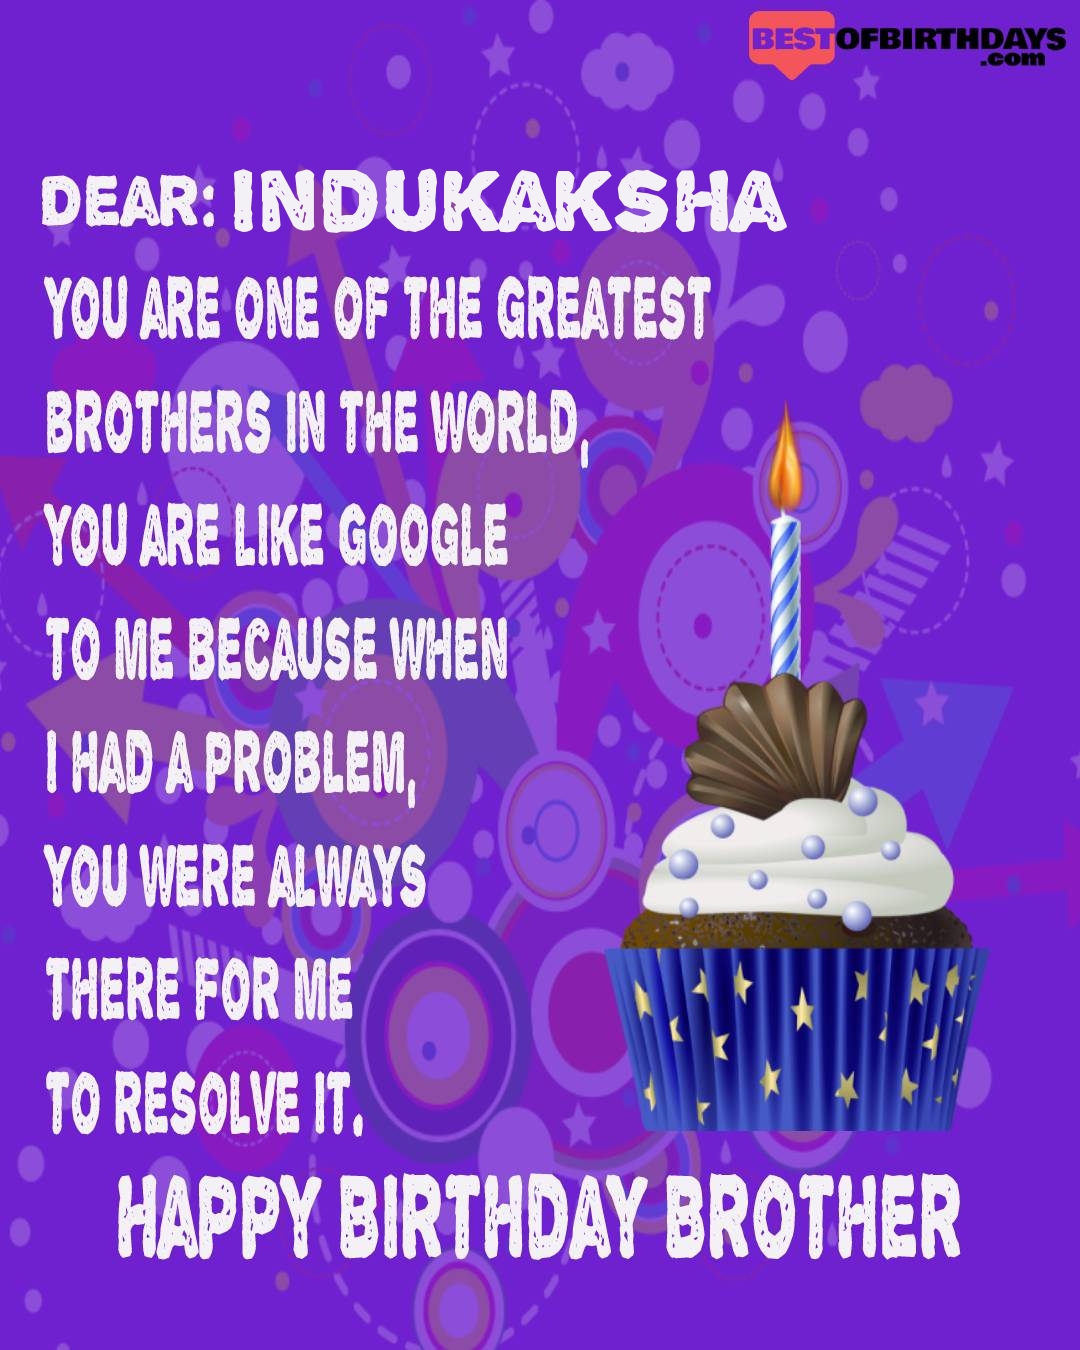 Happy birthday indukaksha bhai brother bro